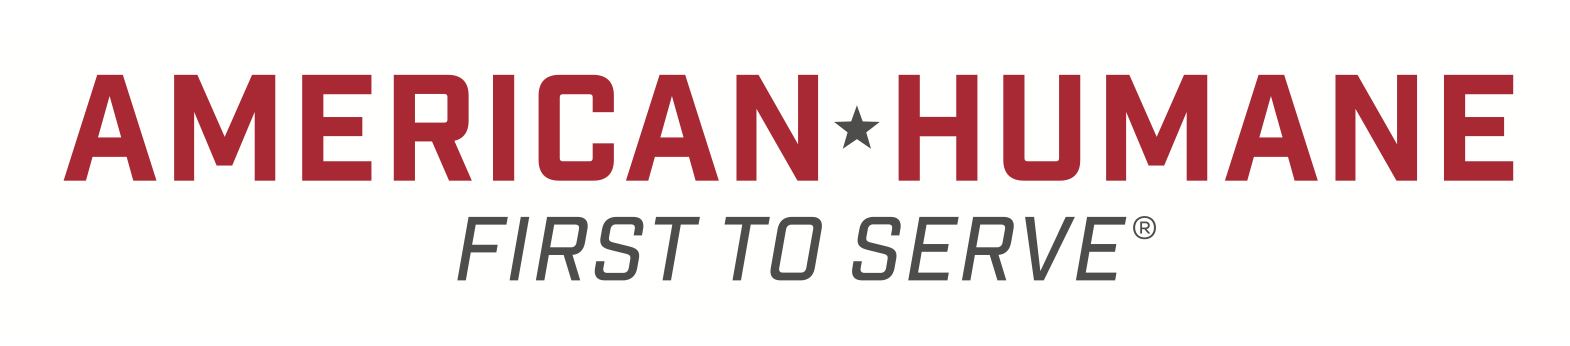 American Humane logo